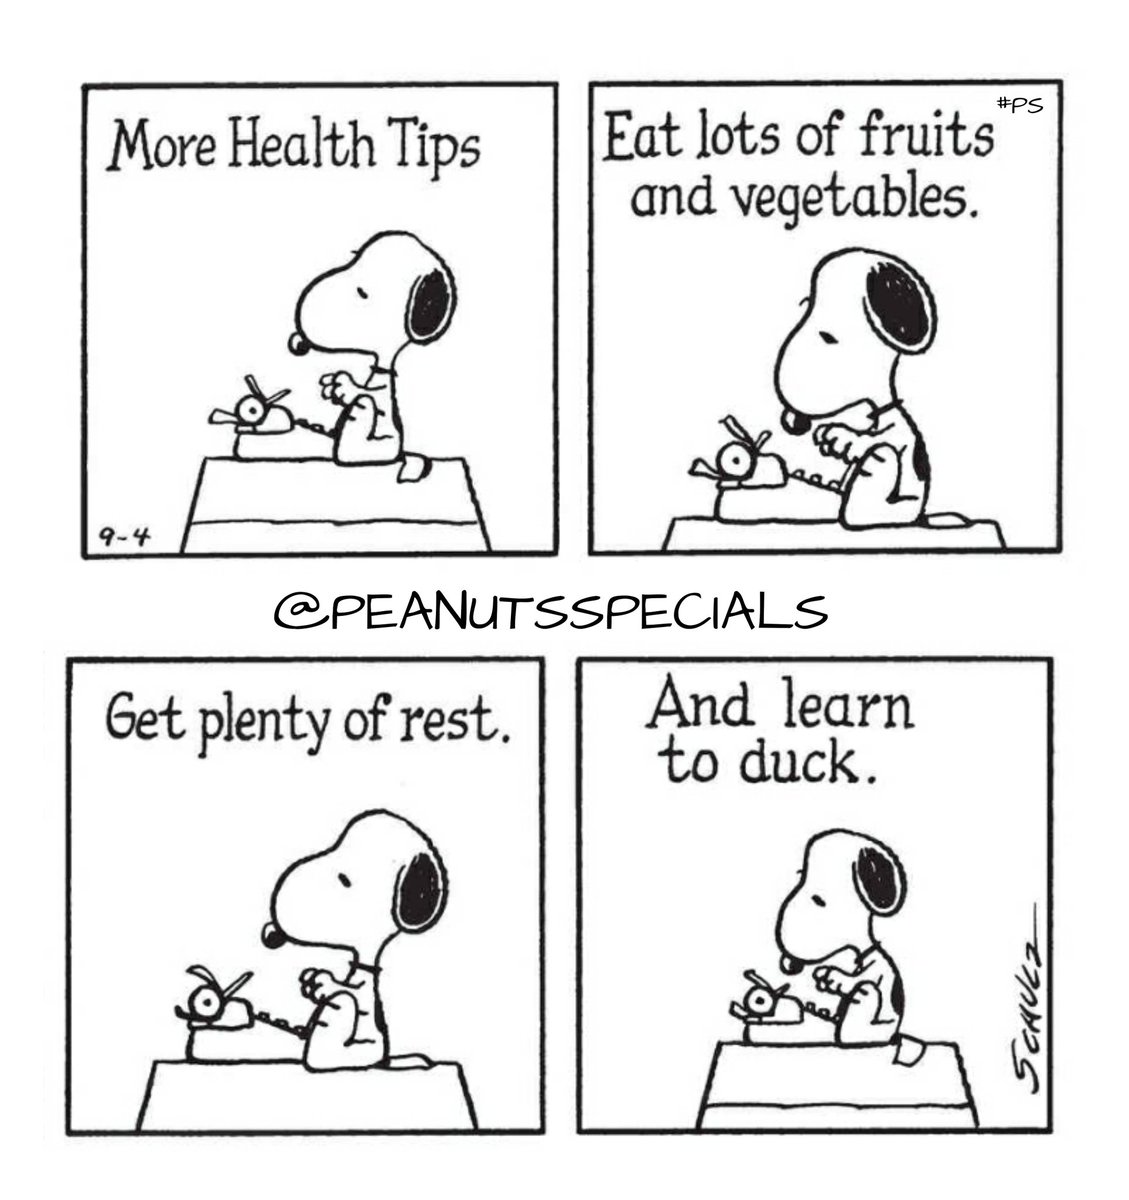 First Appearance: September 4, 1982
#snoopy #more #healthtips #health #tips #eat #vegetables #plenty #rest #learn #duck #peanutsfriday #peanutsstrong #peanutshome #staysafe #schulz #ps #pnts #peanuts #officialpeanutsspecials #peanutsspecials